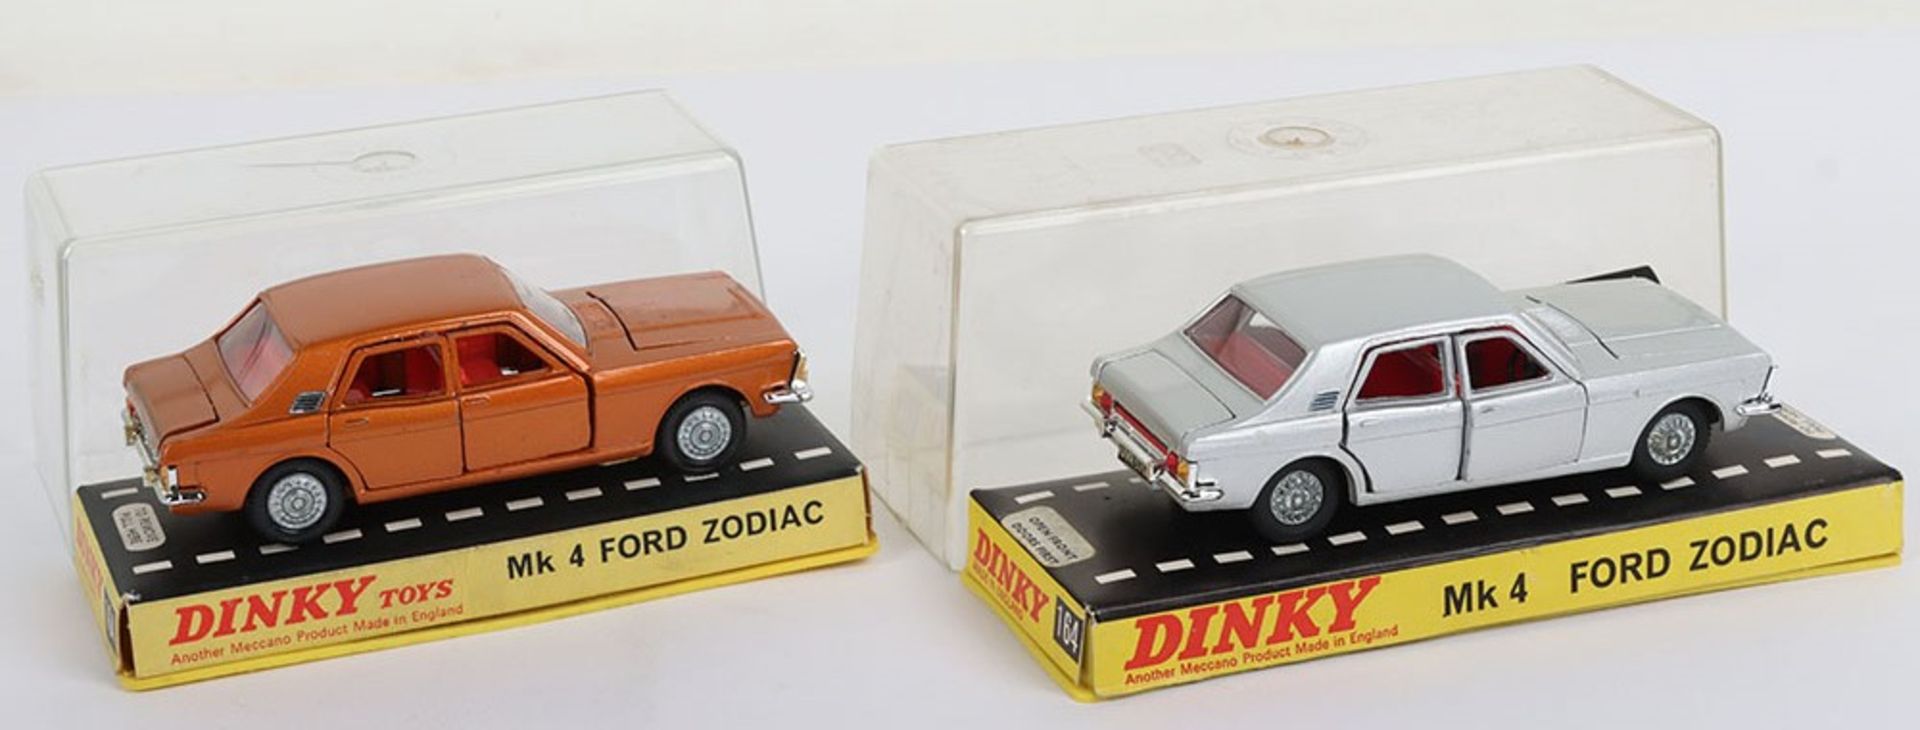 Dinky Toys 164 Mk 4 Ford Zodiac metallic copper body - Image 2 of 4